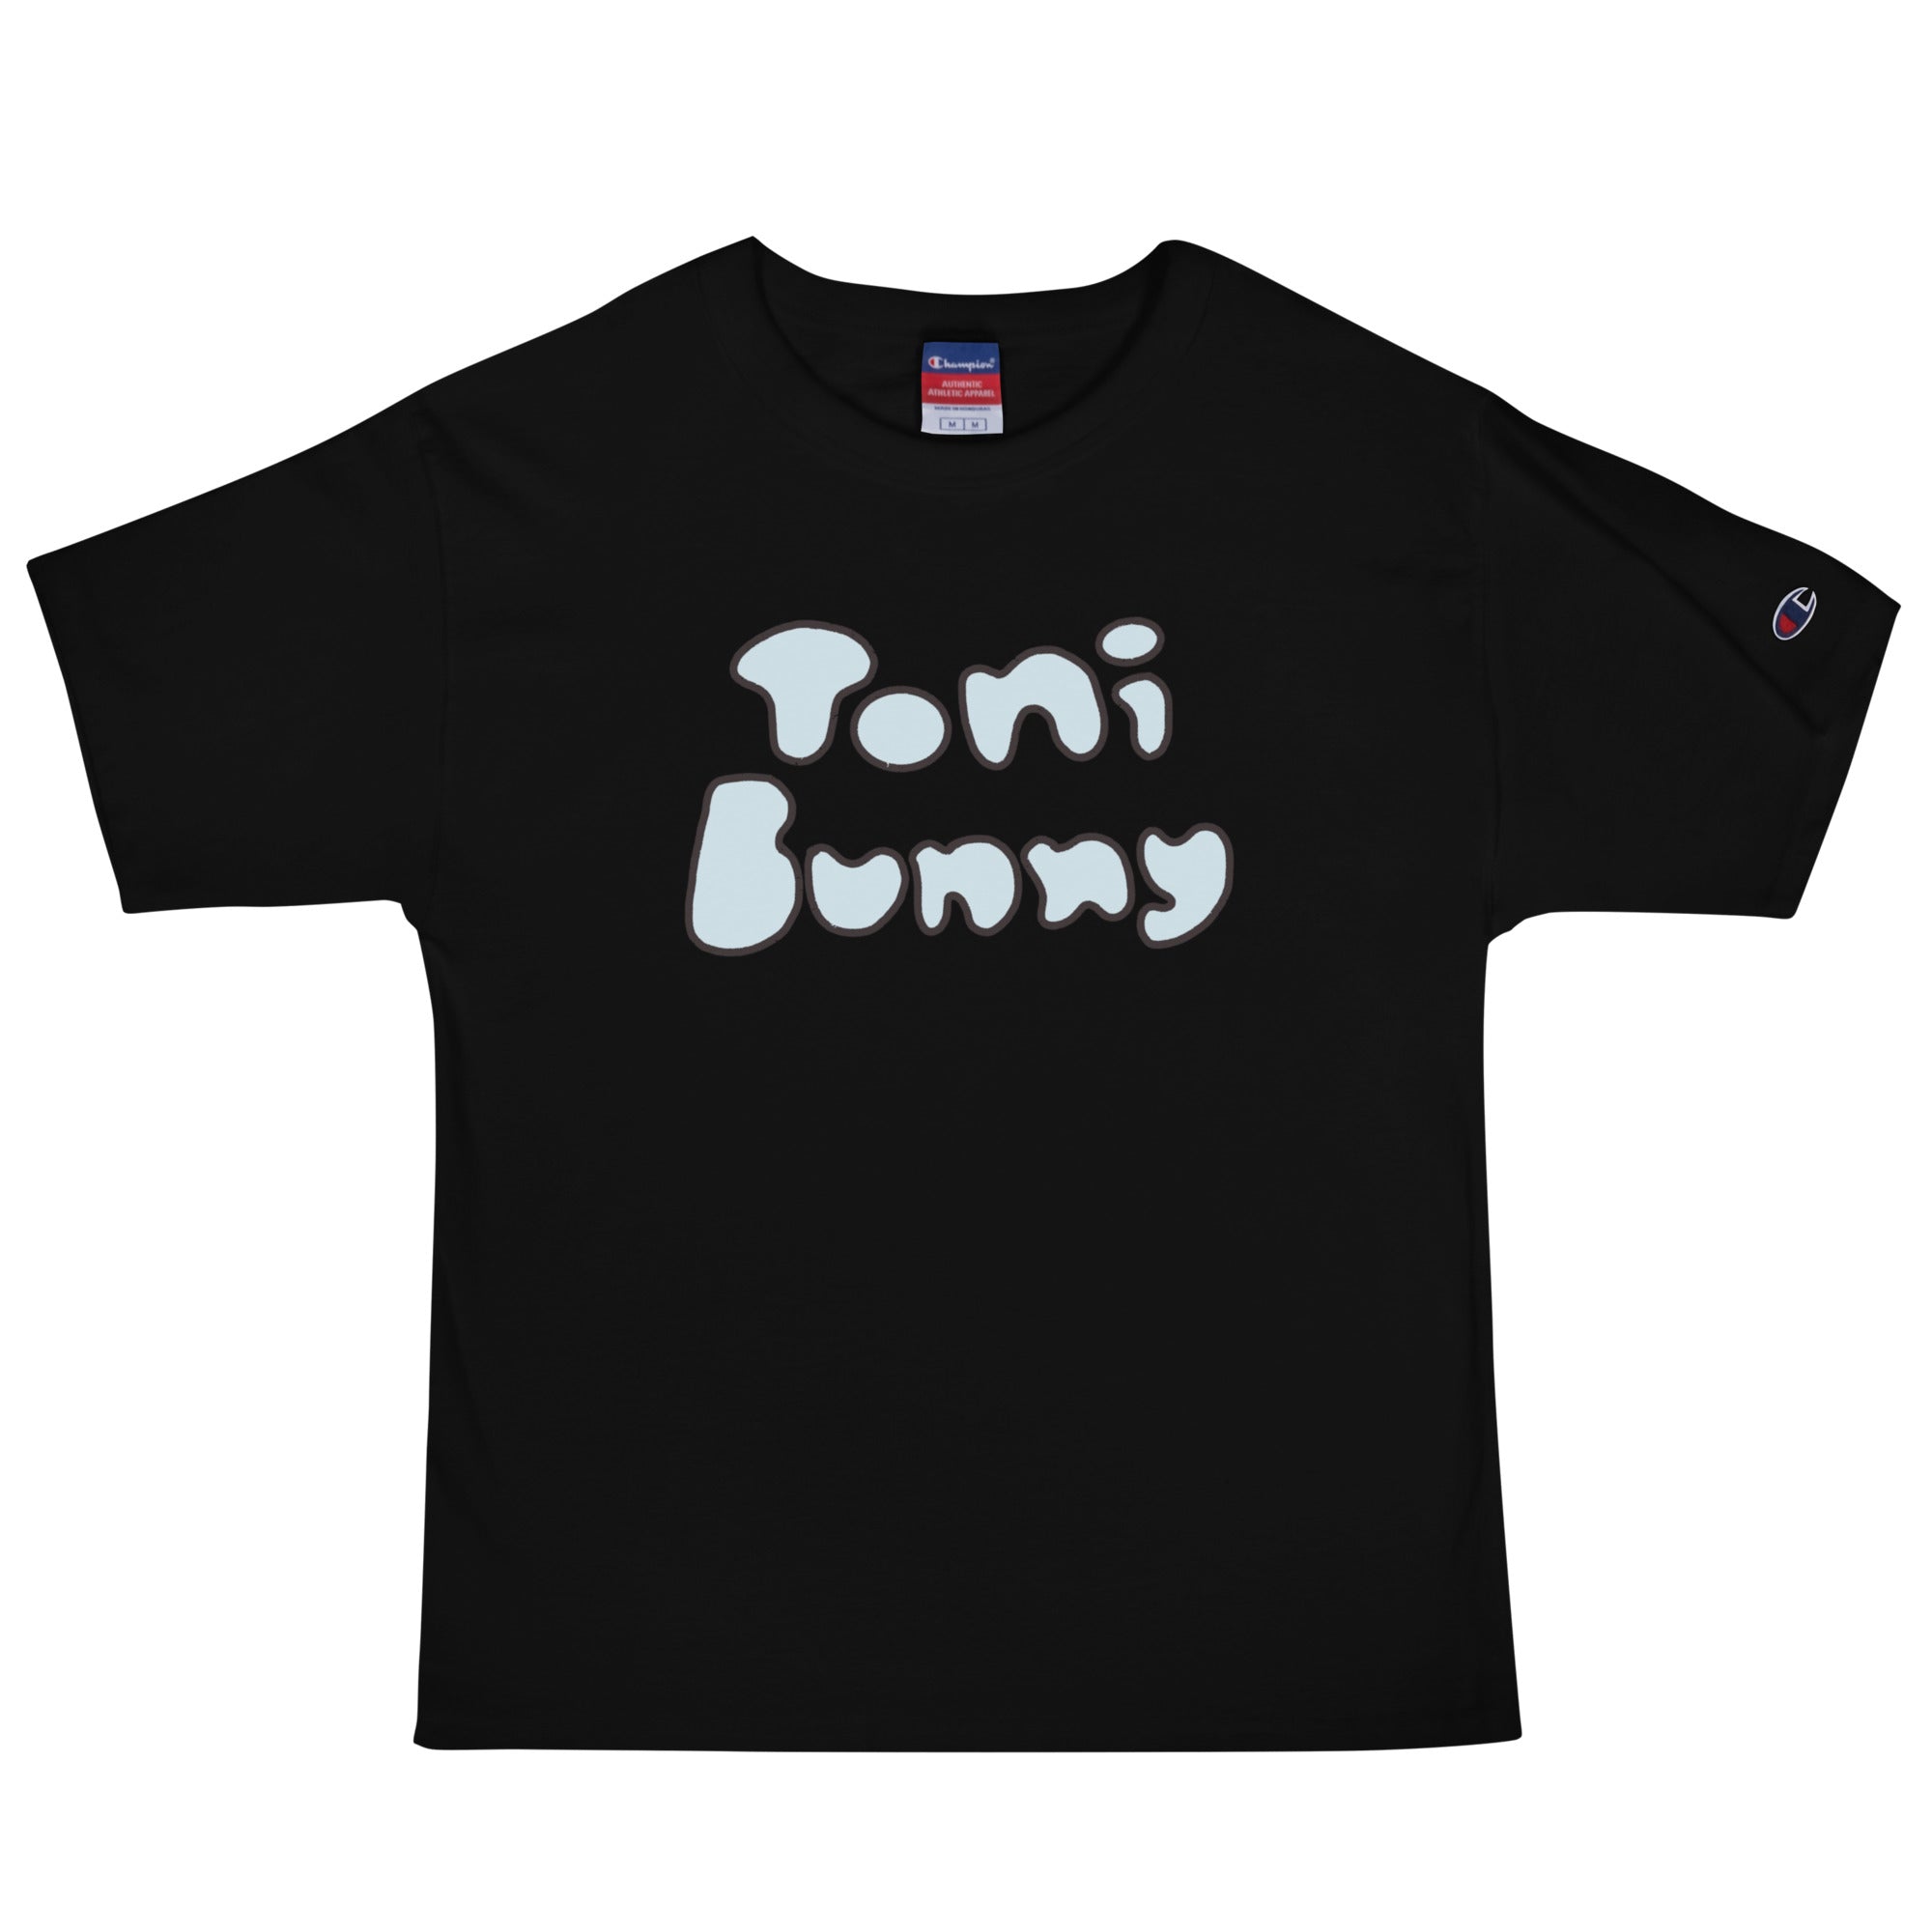 💙 ToniBunny Blue Bubble Letter Men's Champion T-Shirt 💙